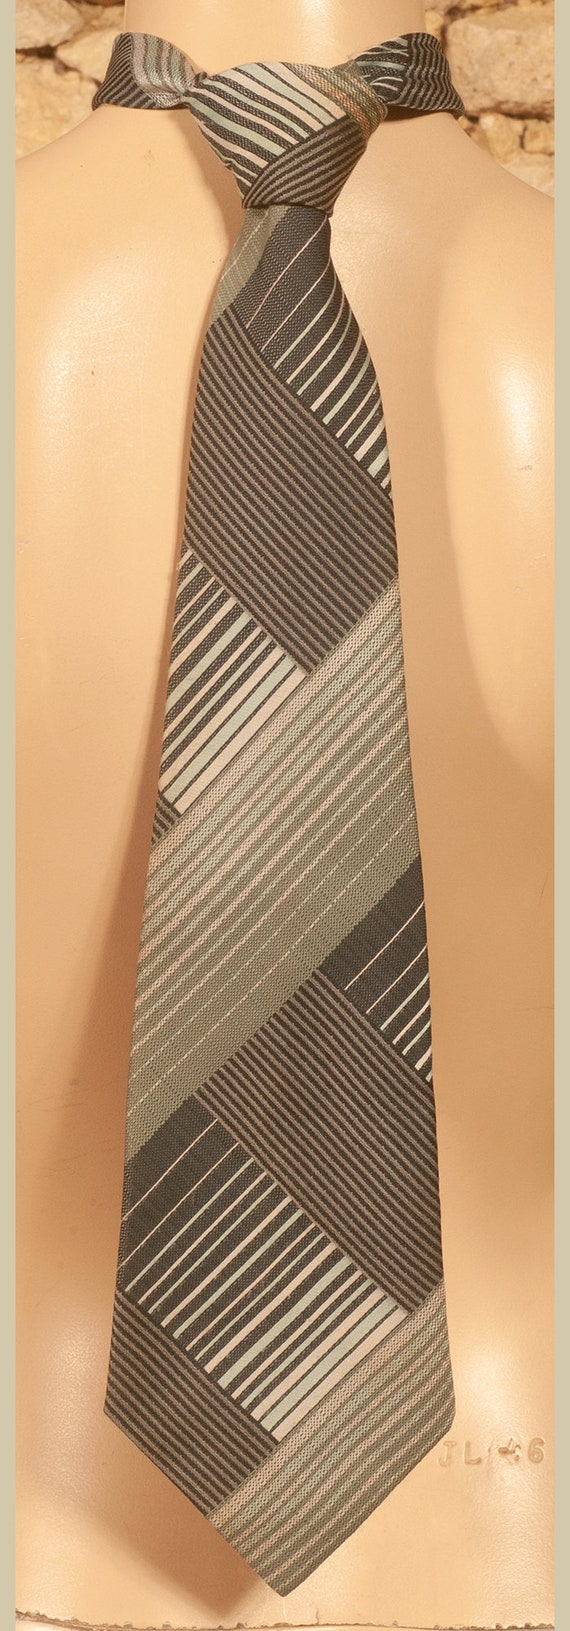 Vintage 70s 'Tergal-Up' Extra Wide Tie / Necktie … - image 2